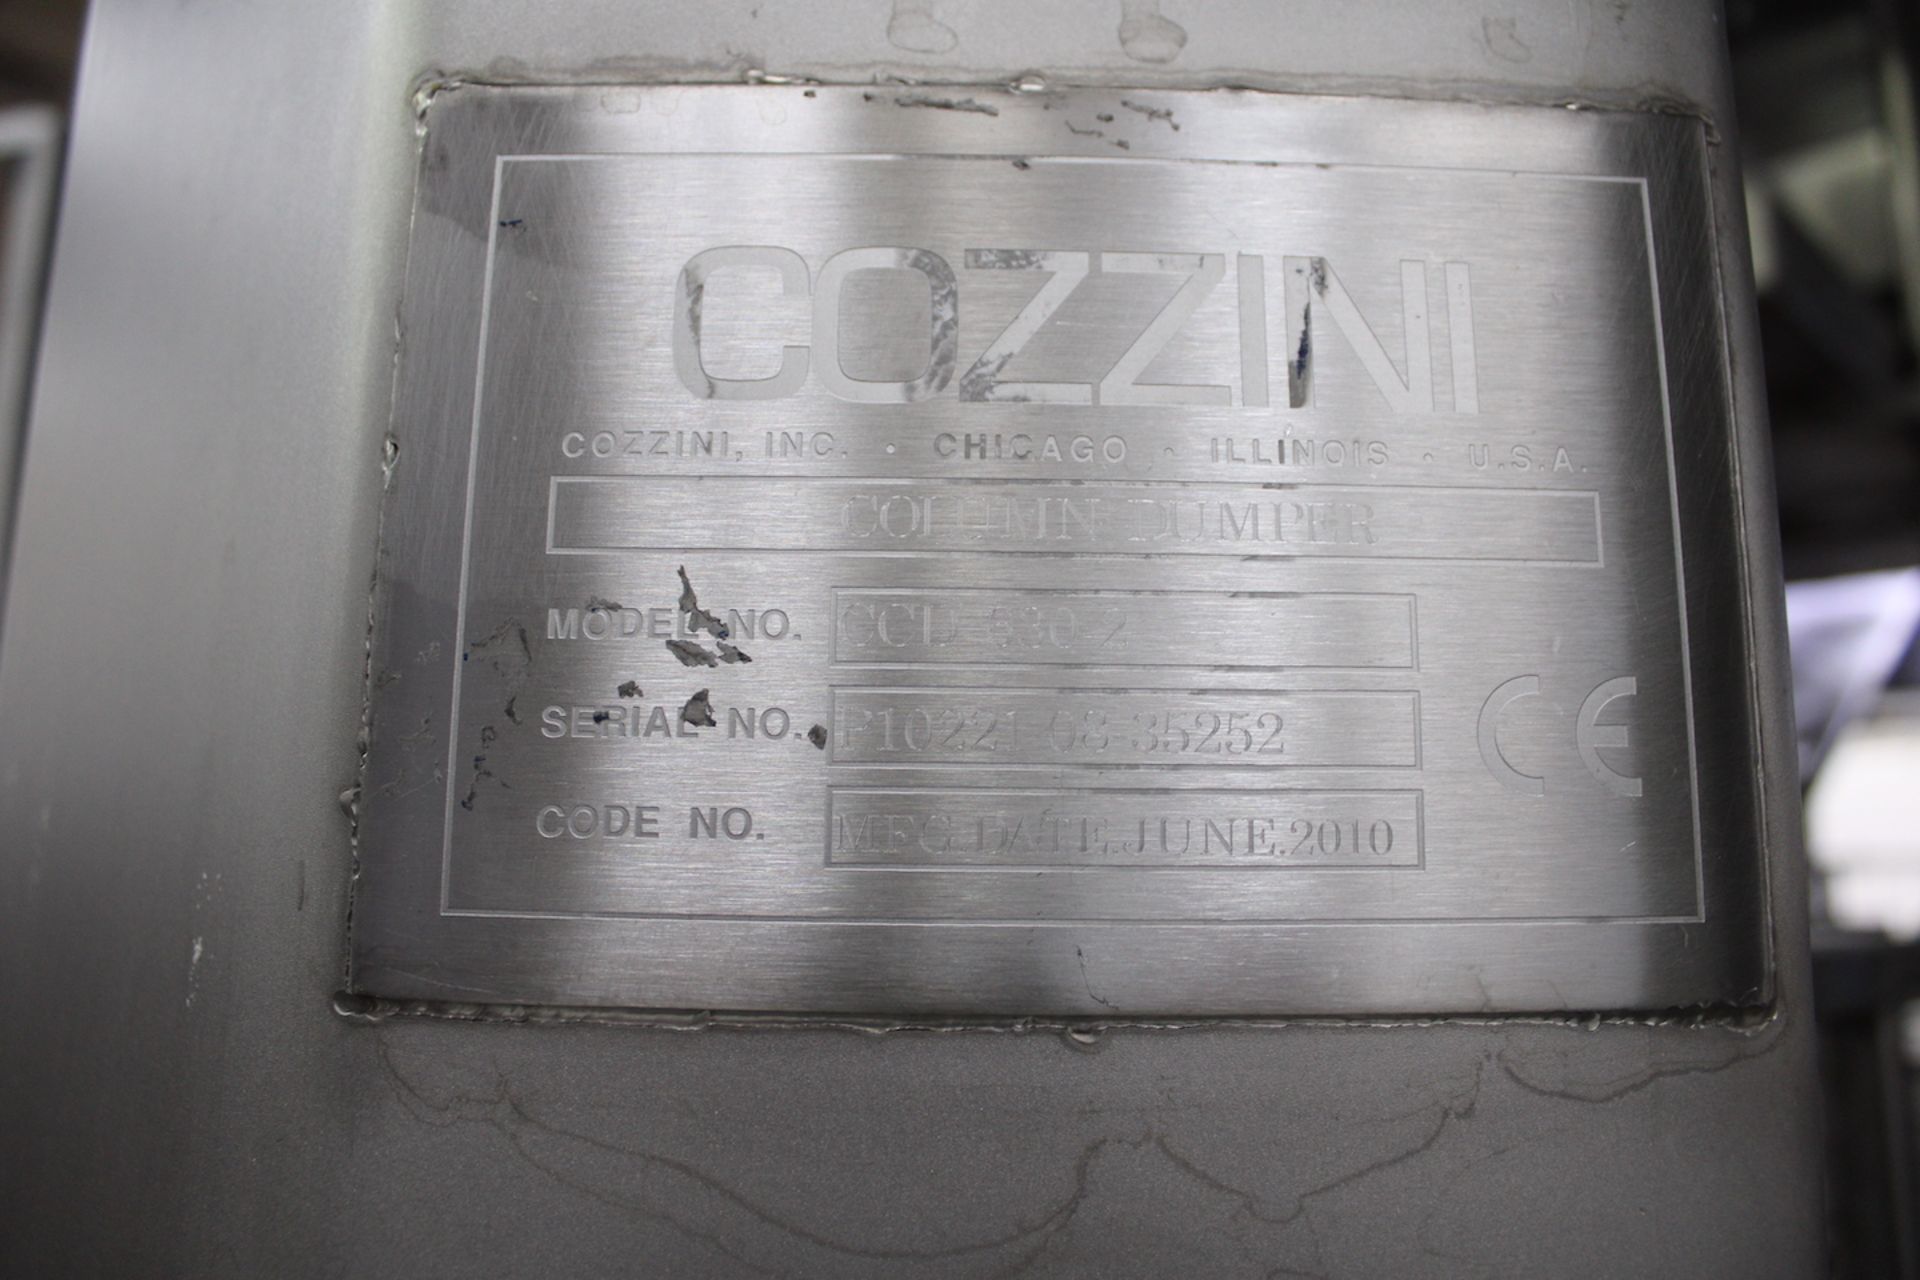 COZZINI COLUMN LIFT DUMPER, MODEL CCD630, S/N P10221-08-35252 - Image 6 of 7